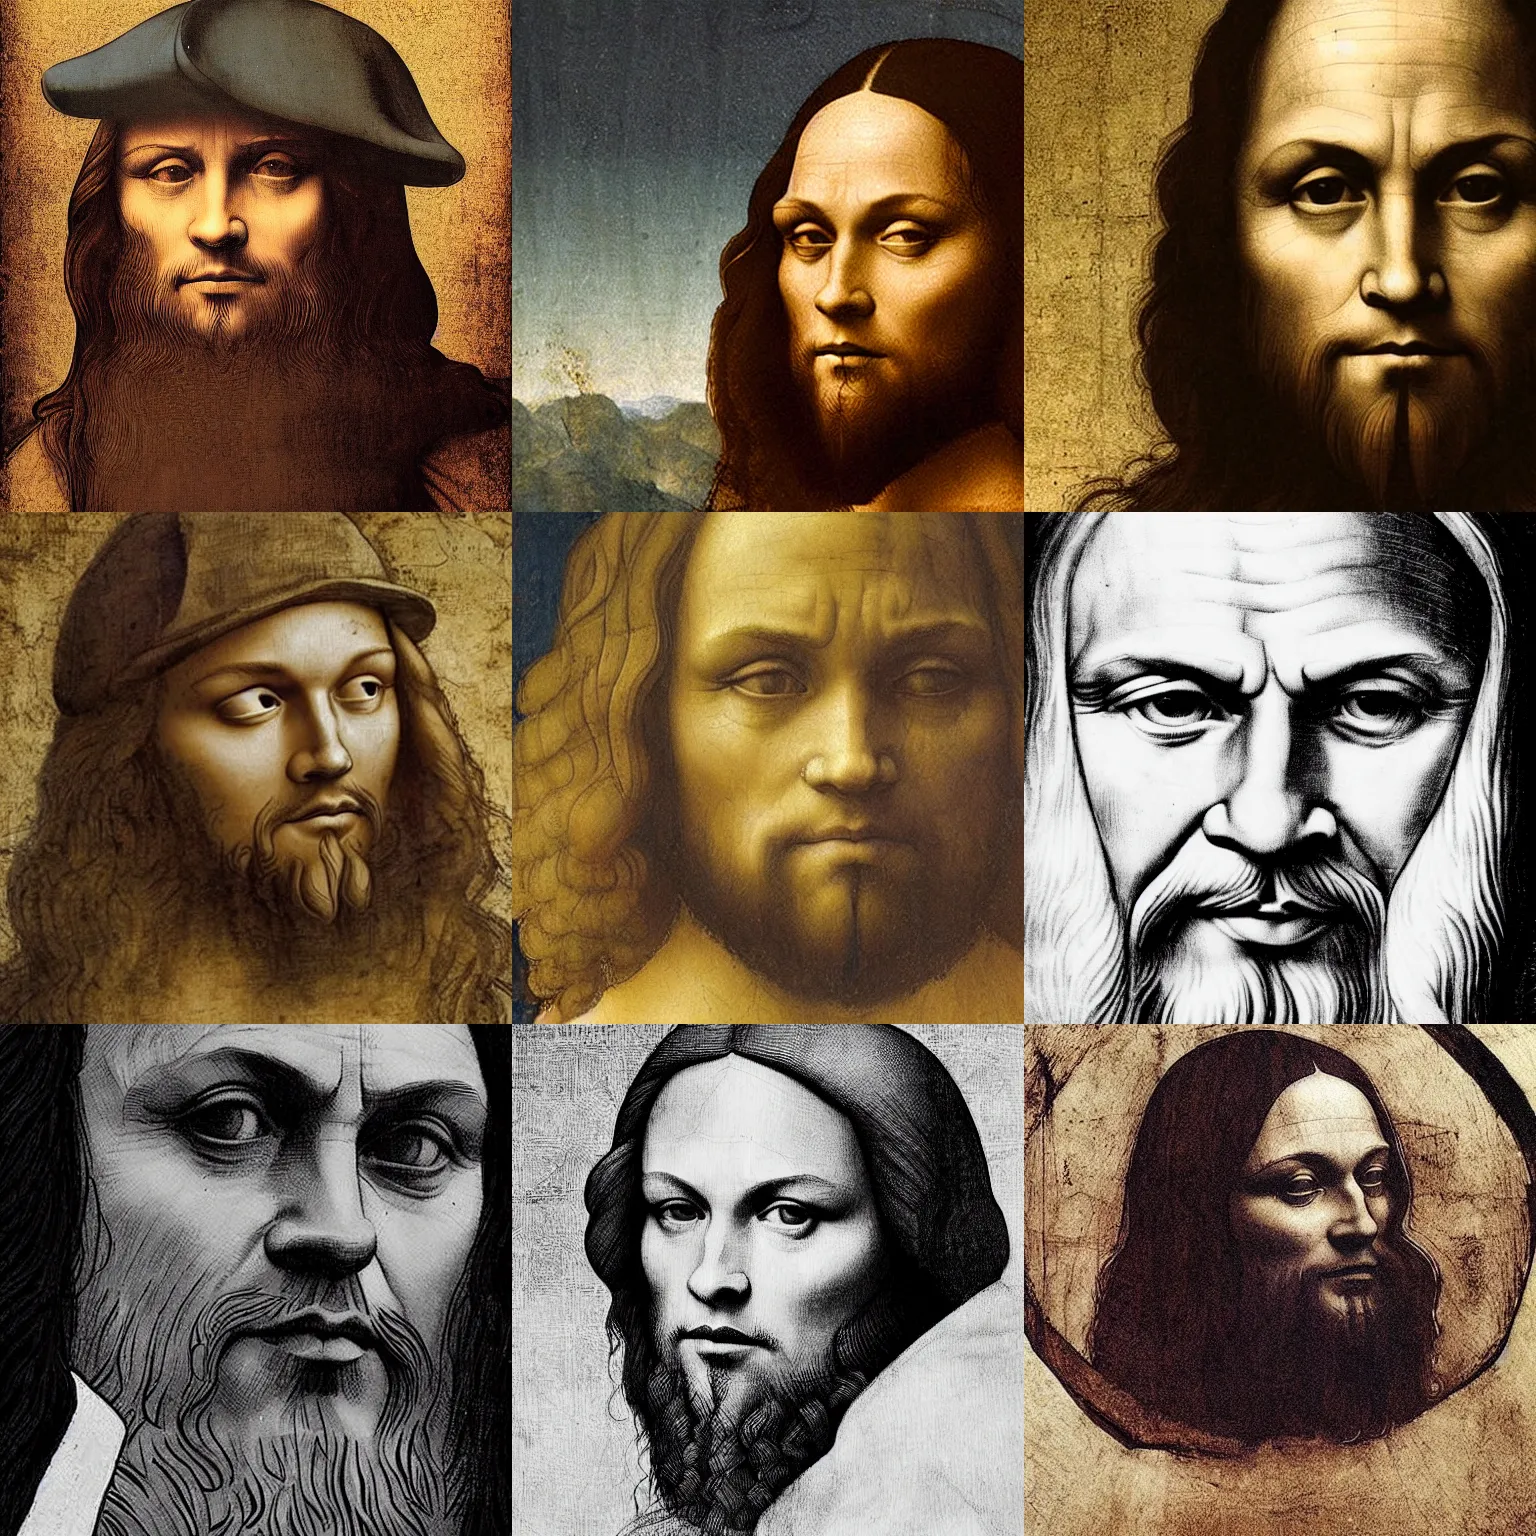 Prompt: Leonardo Da Vinci by Leonardo Dicaprio